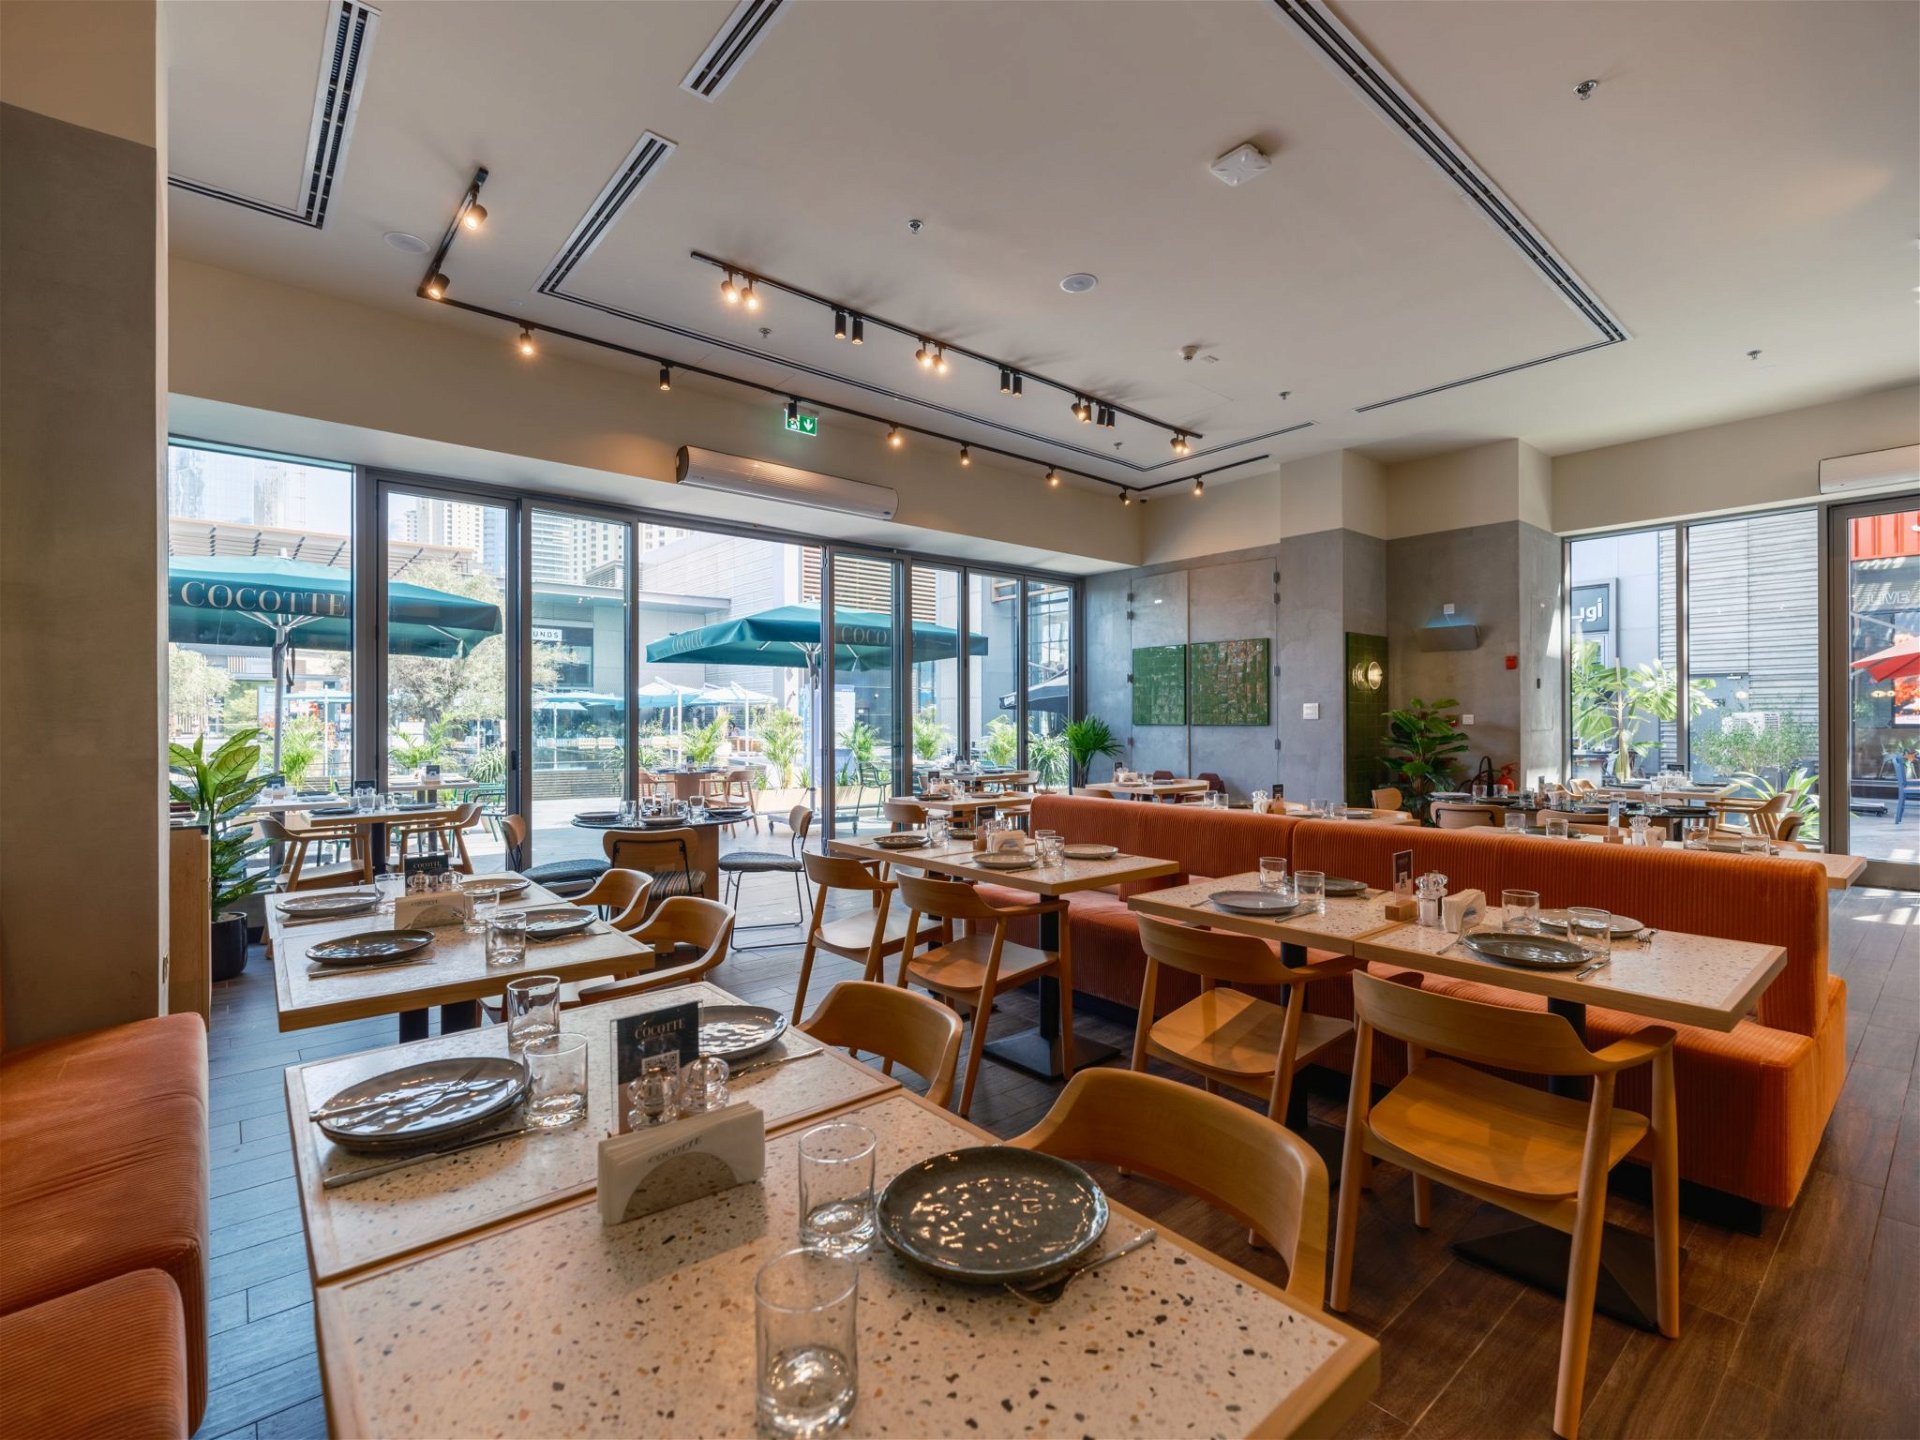 Cocotte Restaurant - JBR, Dubai - Restaurant Interior Design on Love ...